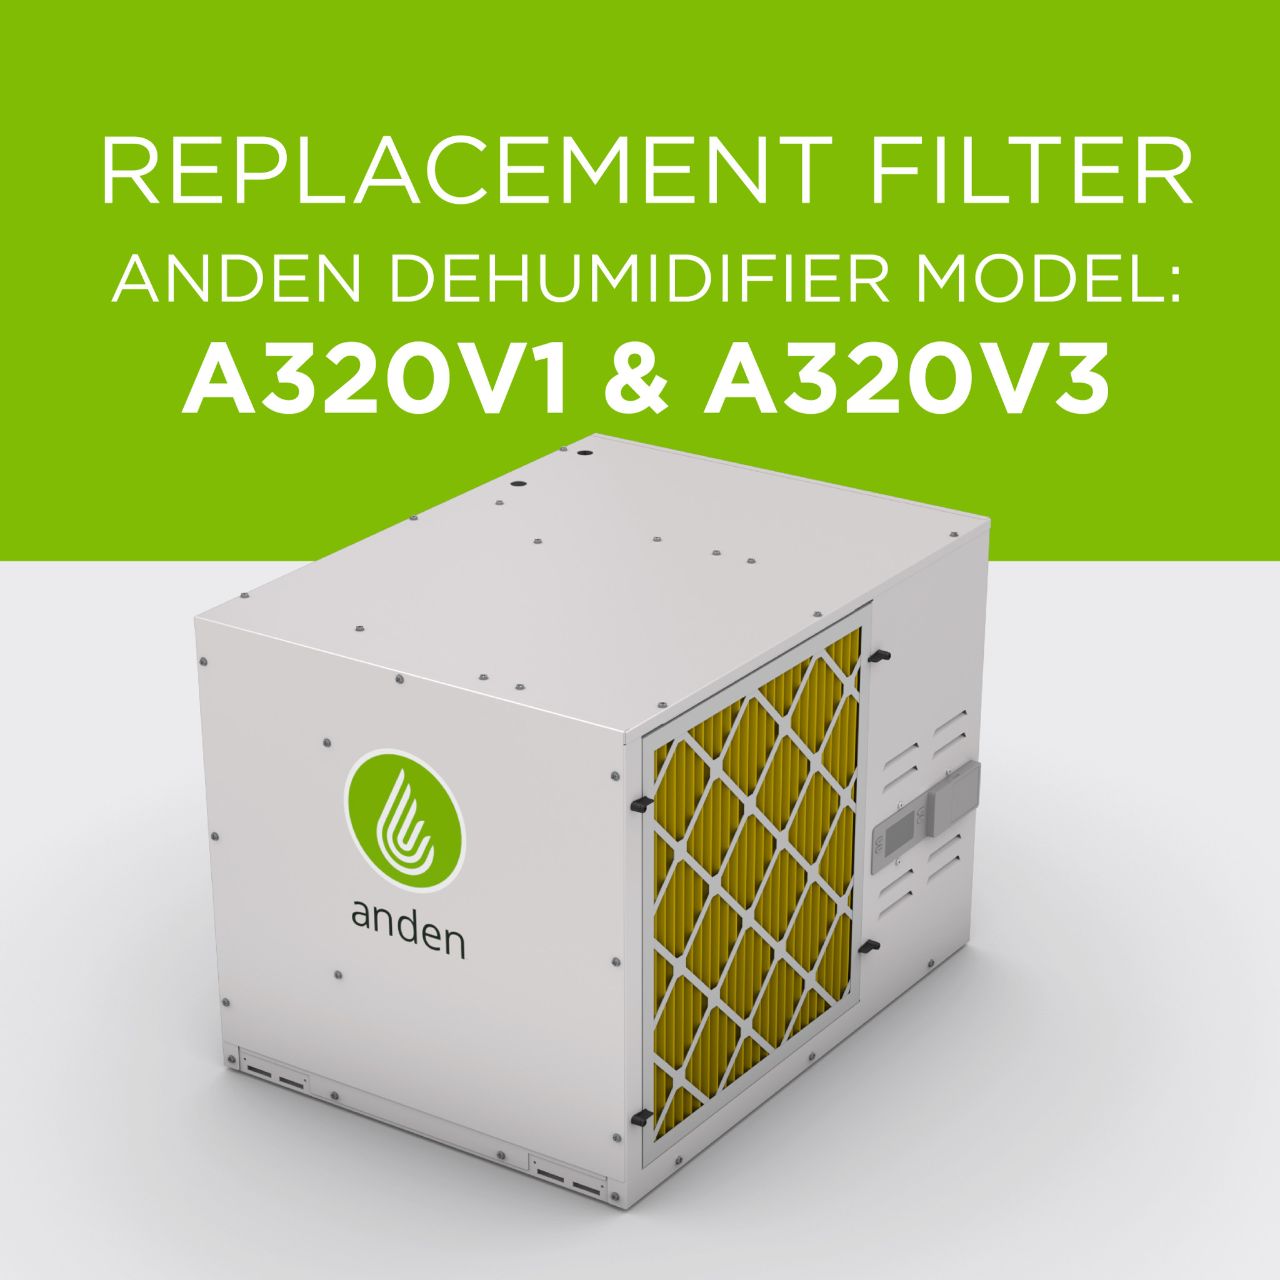 MERV 11 Replacement Filter (6 Pack) for Model A320V1 & A320V3